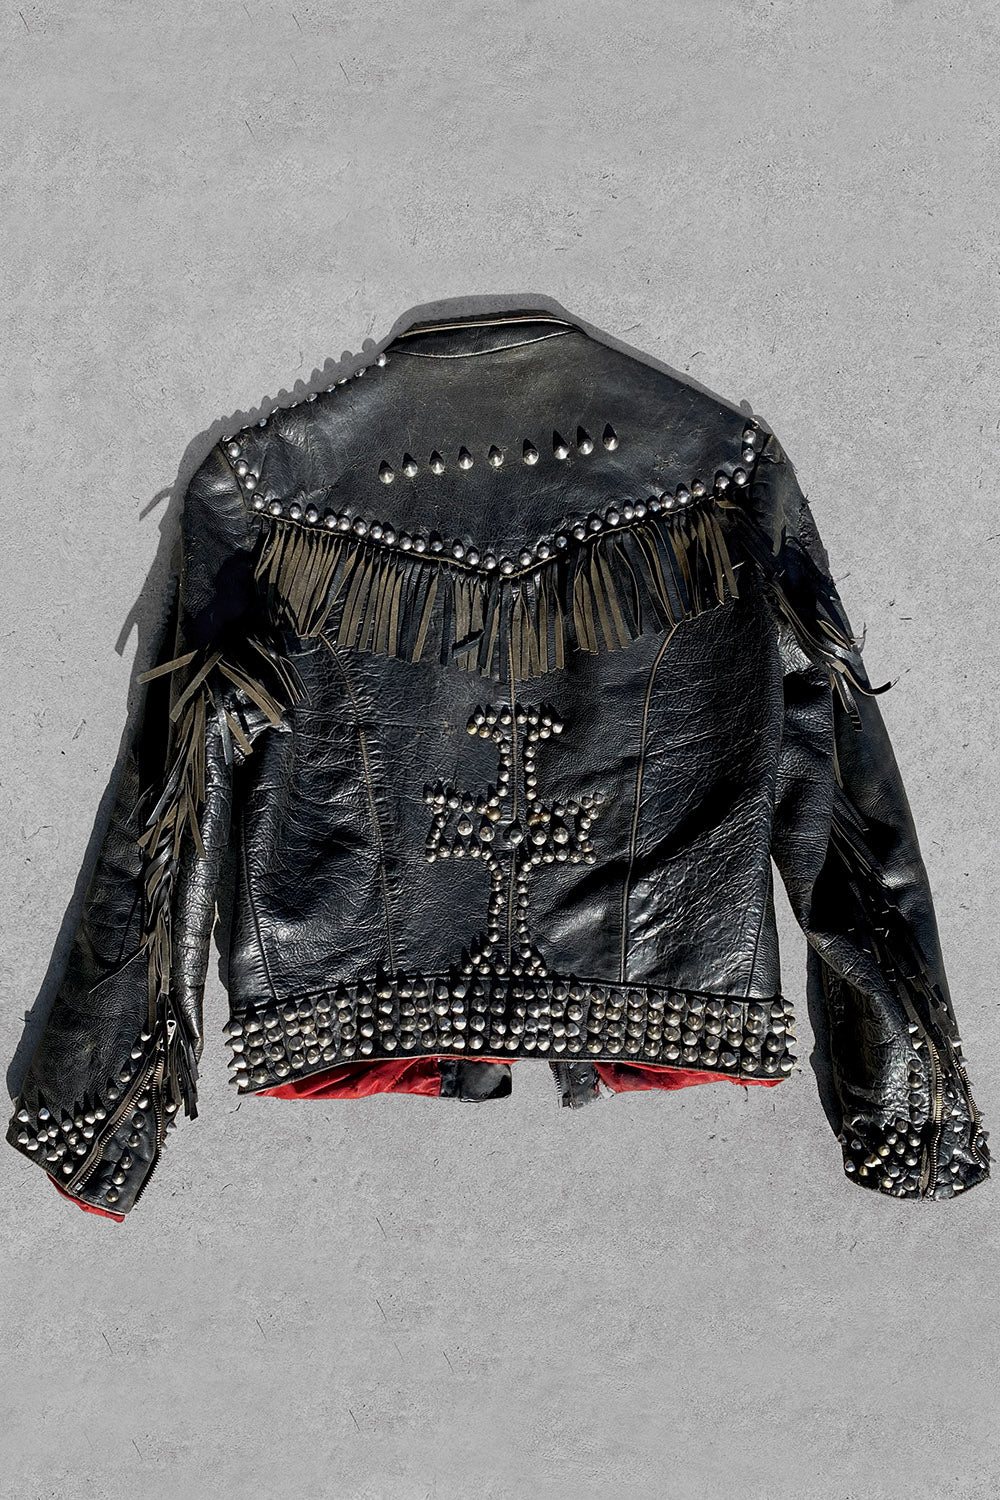 OOAK Customized Vintage Leather Jacket #3